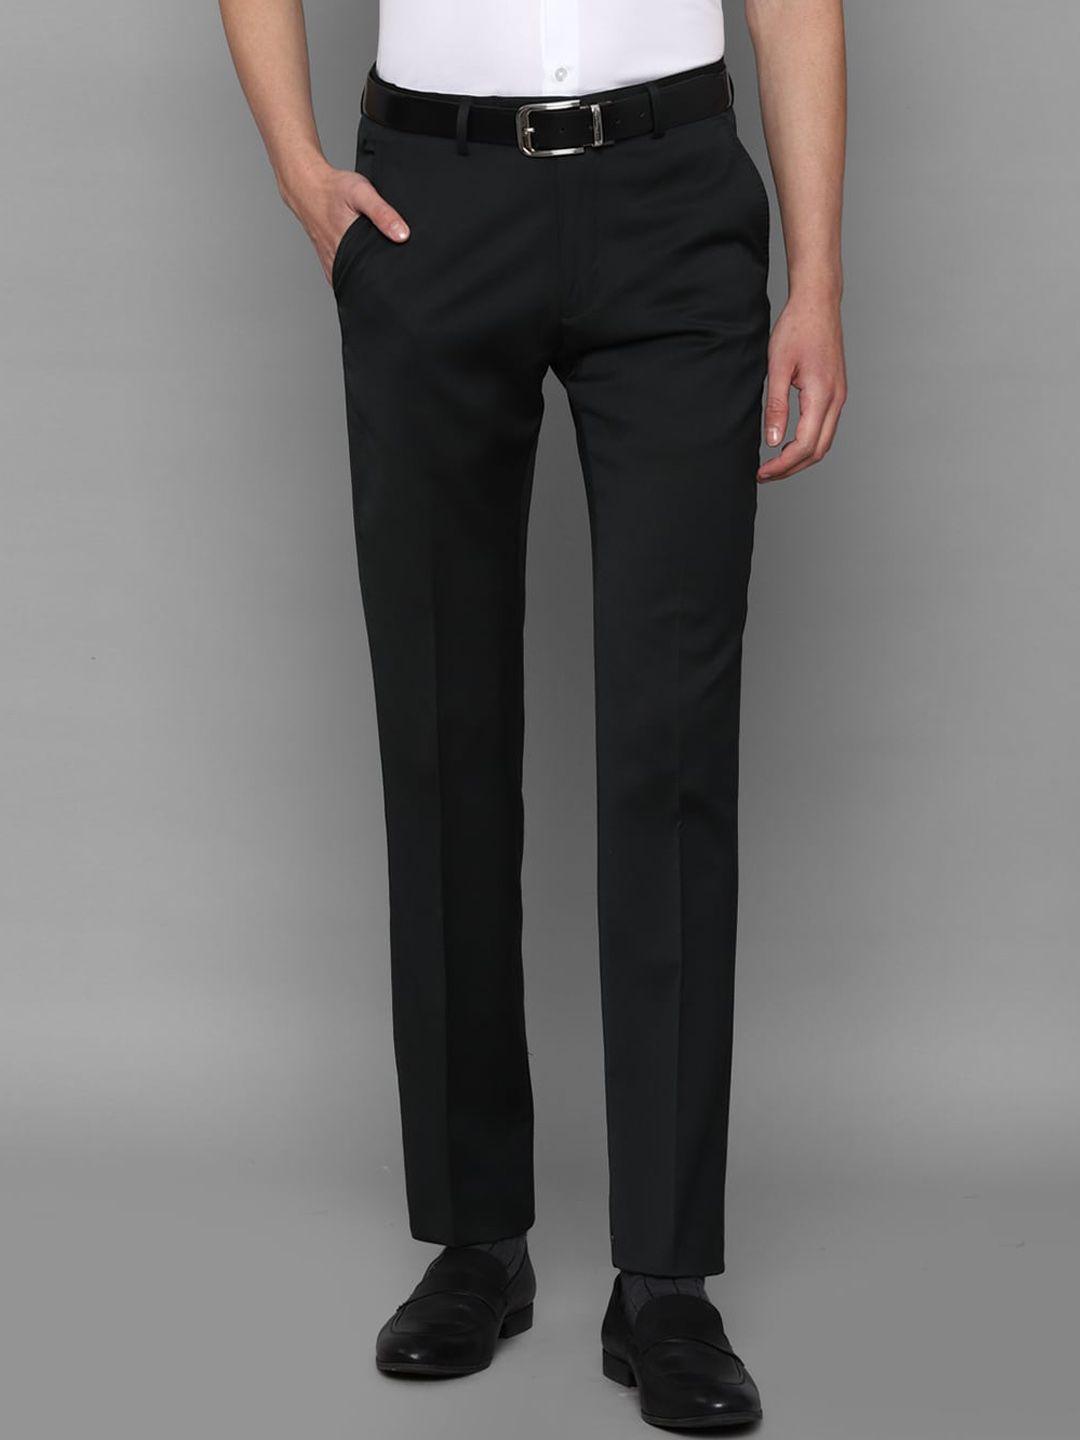 louis philippe men black regular fit solid trousers